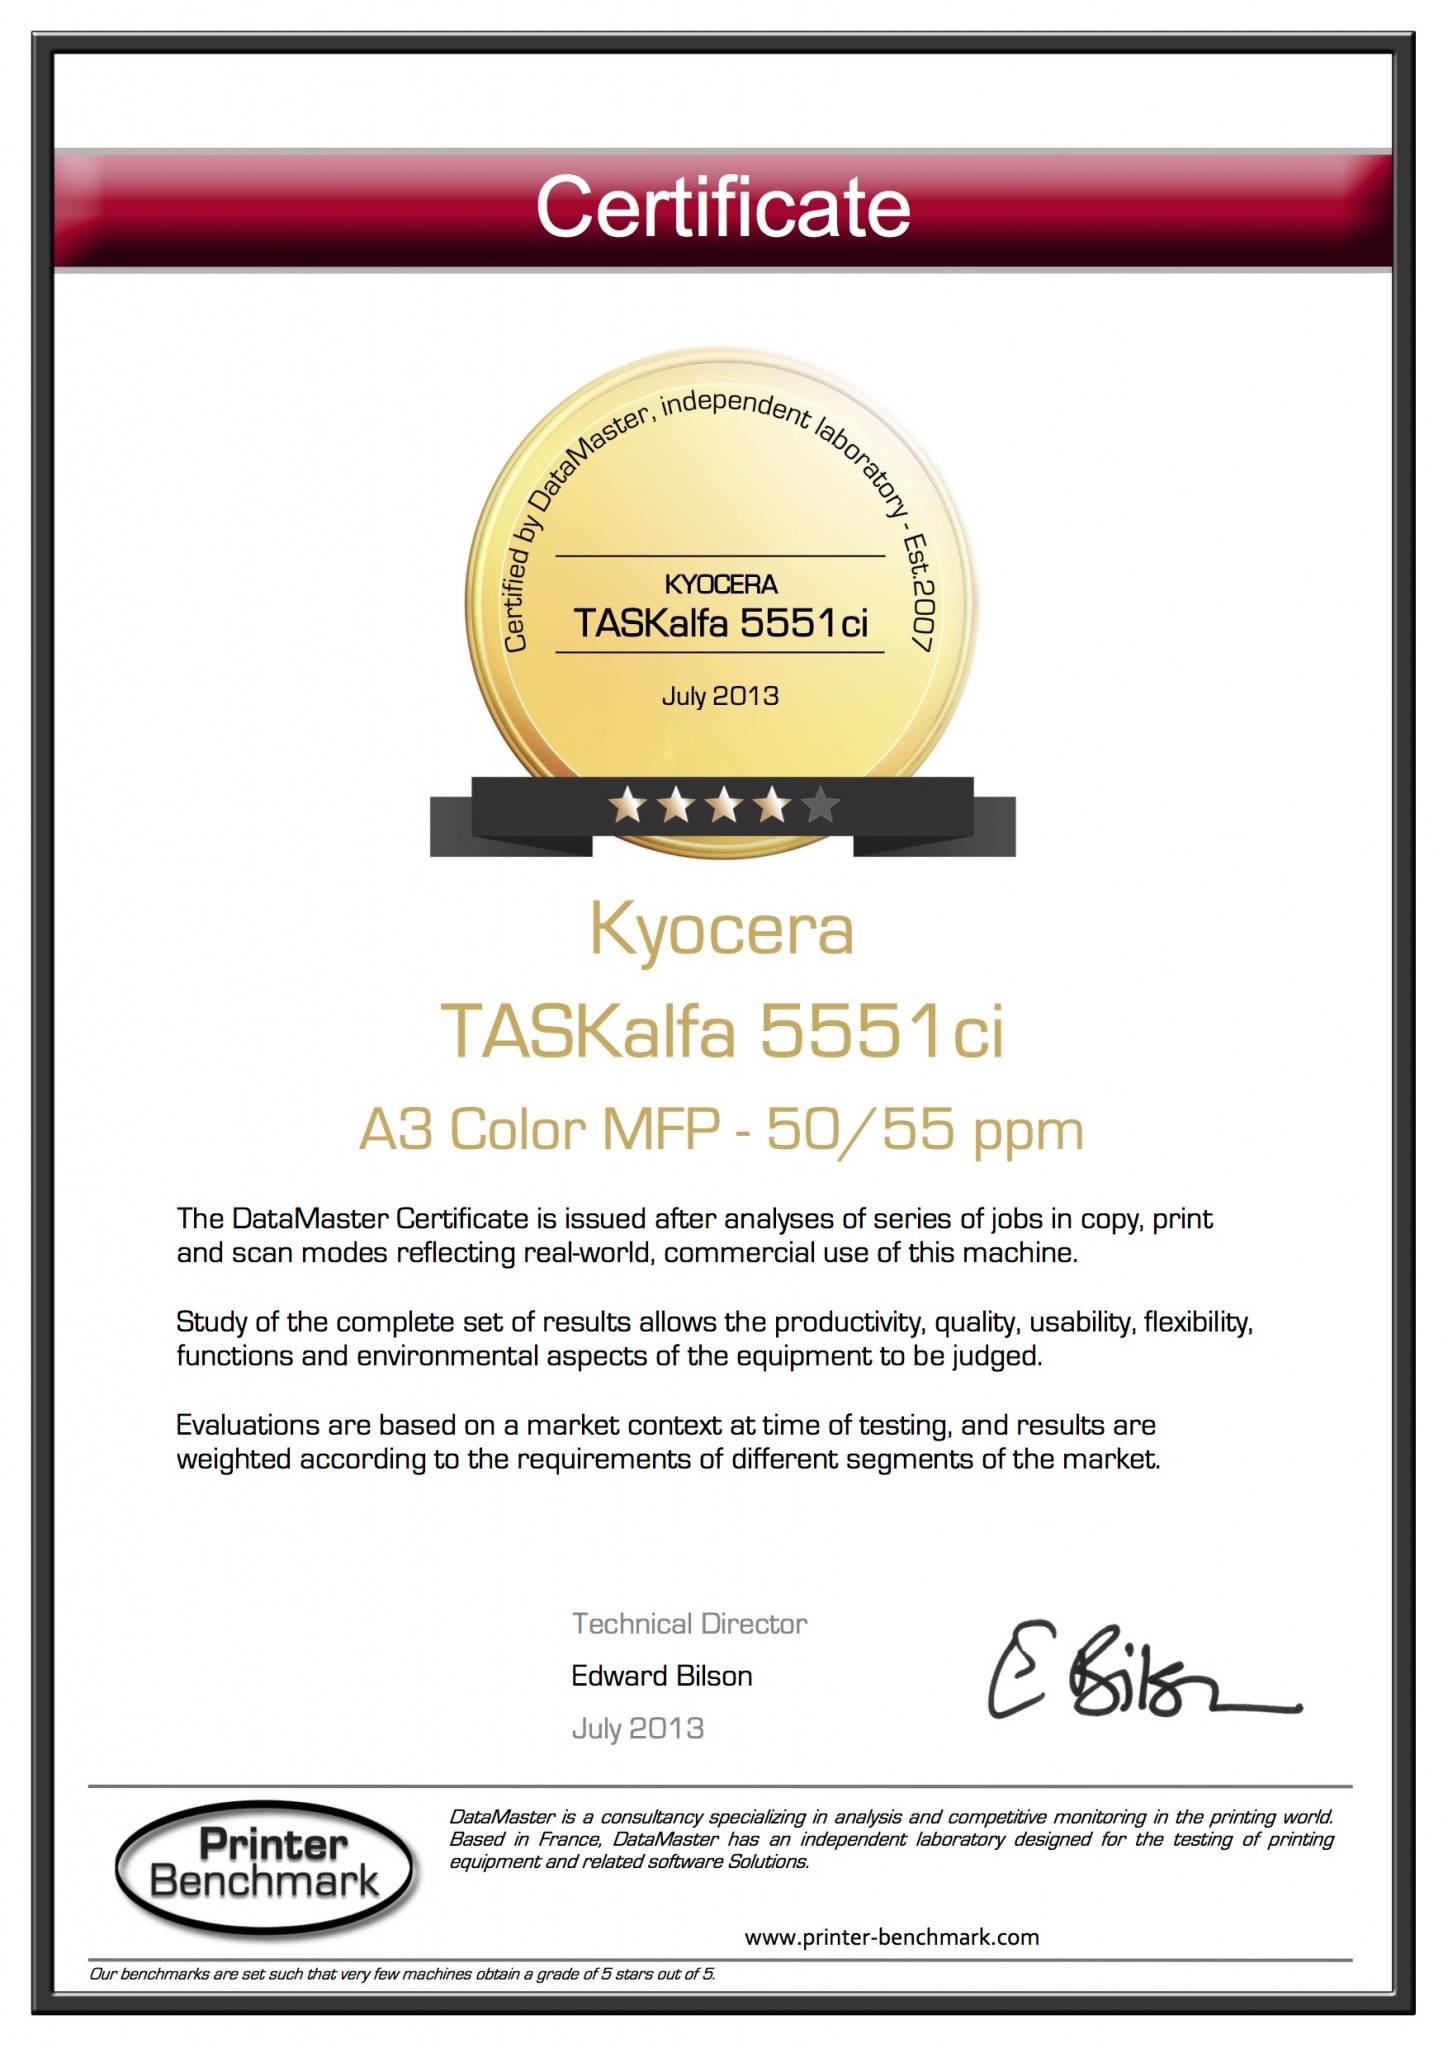 DataMaster_Certificate_Kyocera_TASKalfa5551ci-2